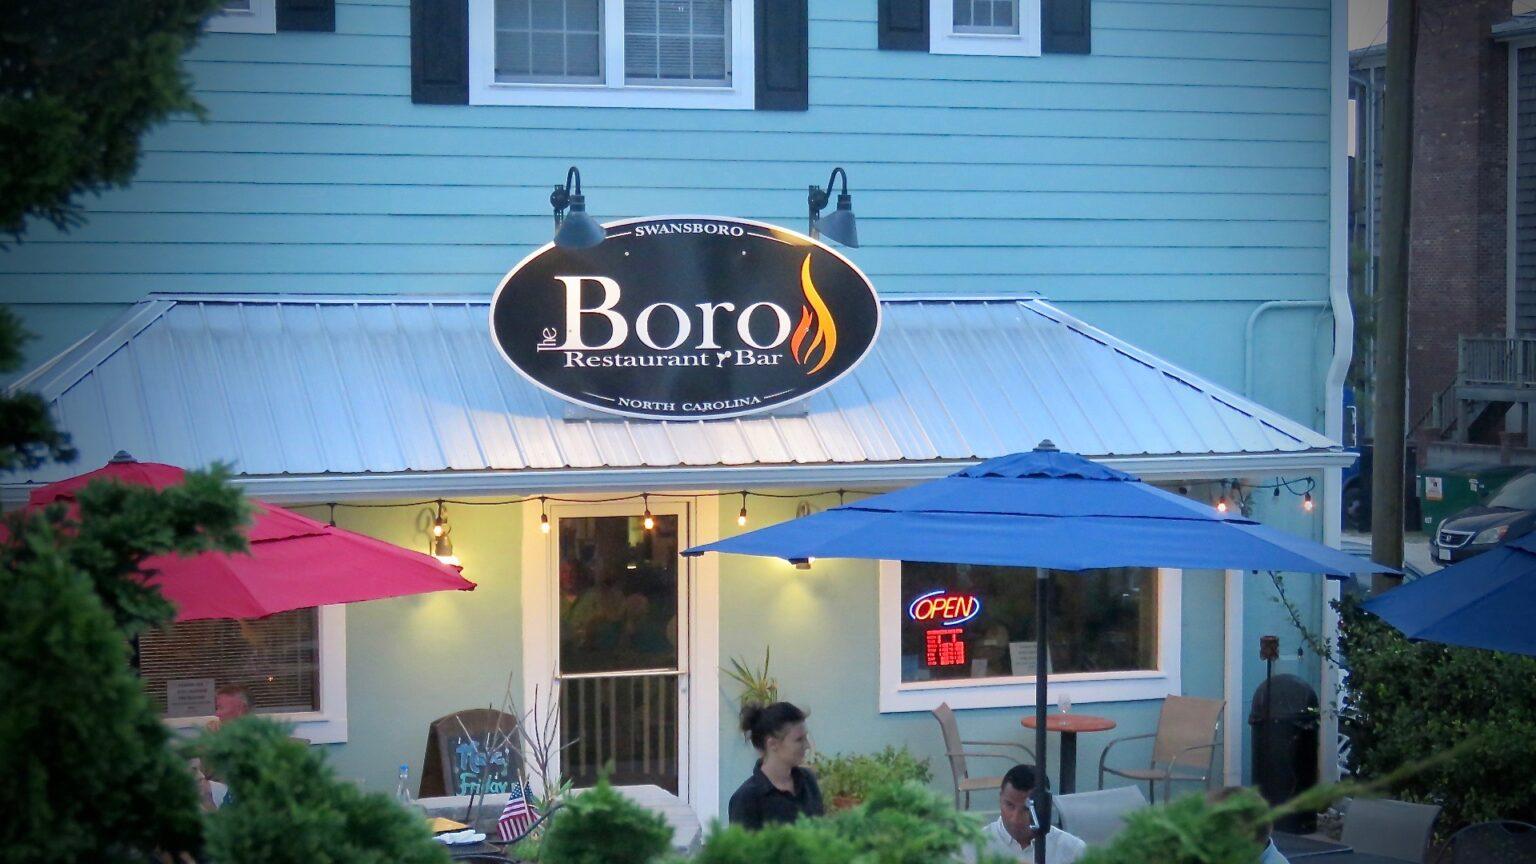 Pet Friendly The Boro Restaurant & Bar